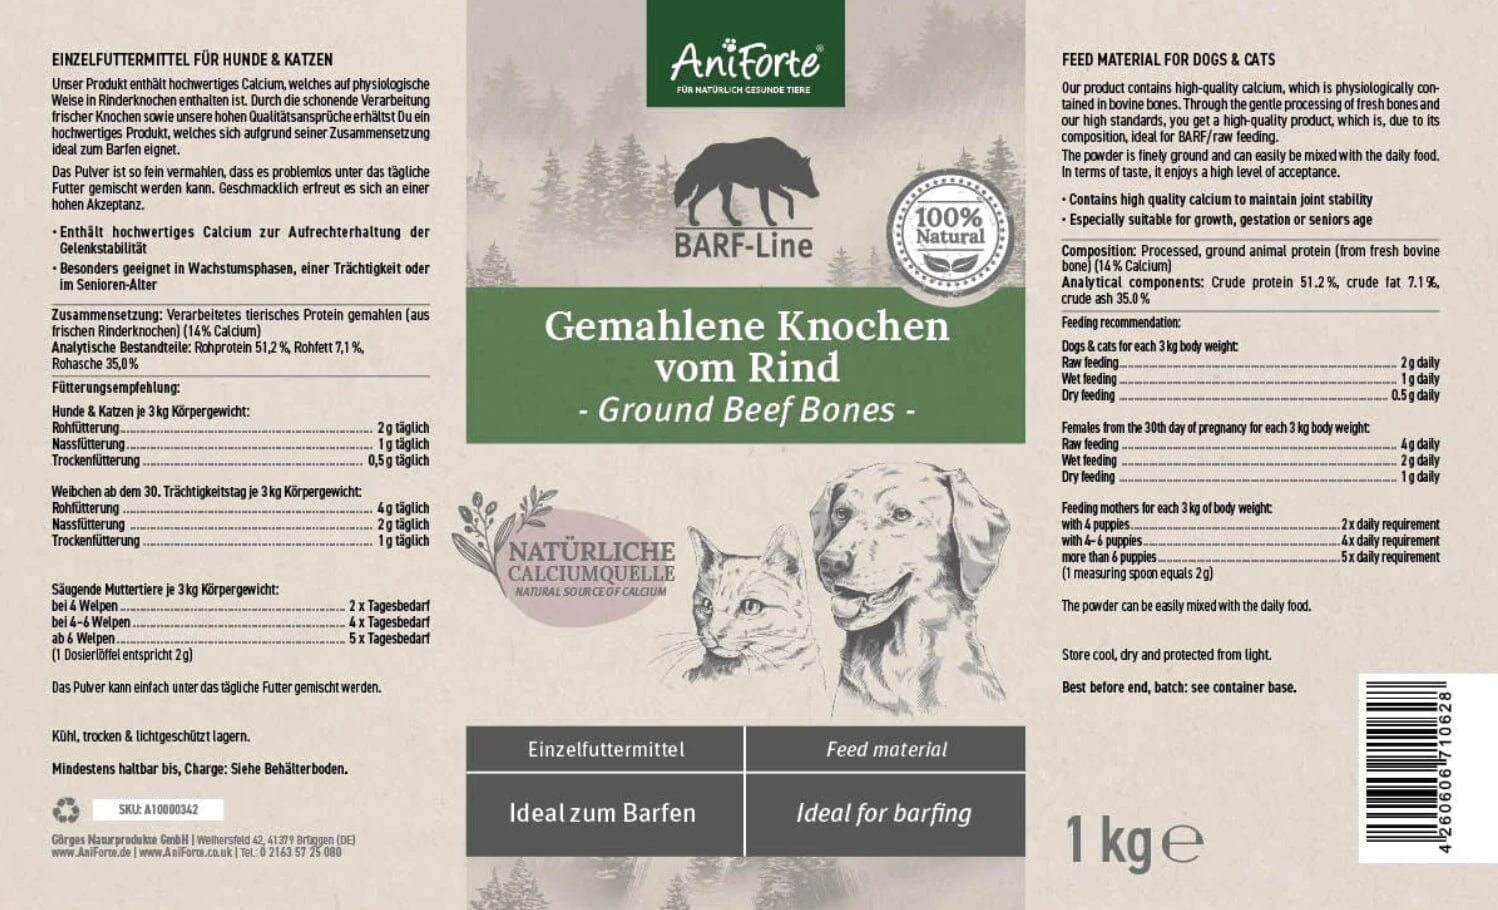 Ground Beef Bones - Natural Calcium Supplement for Dogs & Cats - AniForte UK